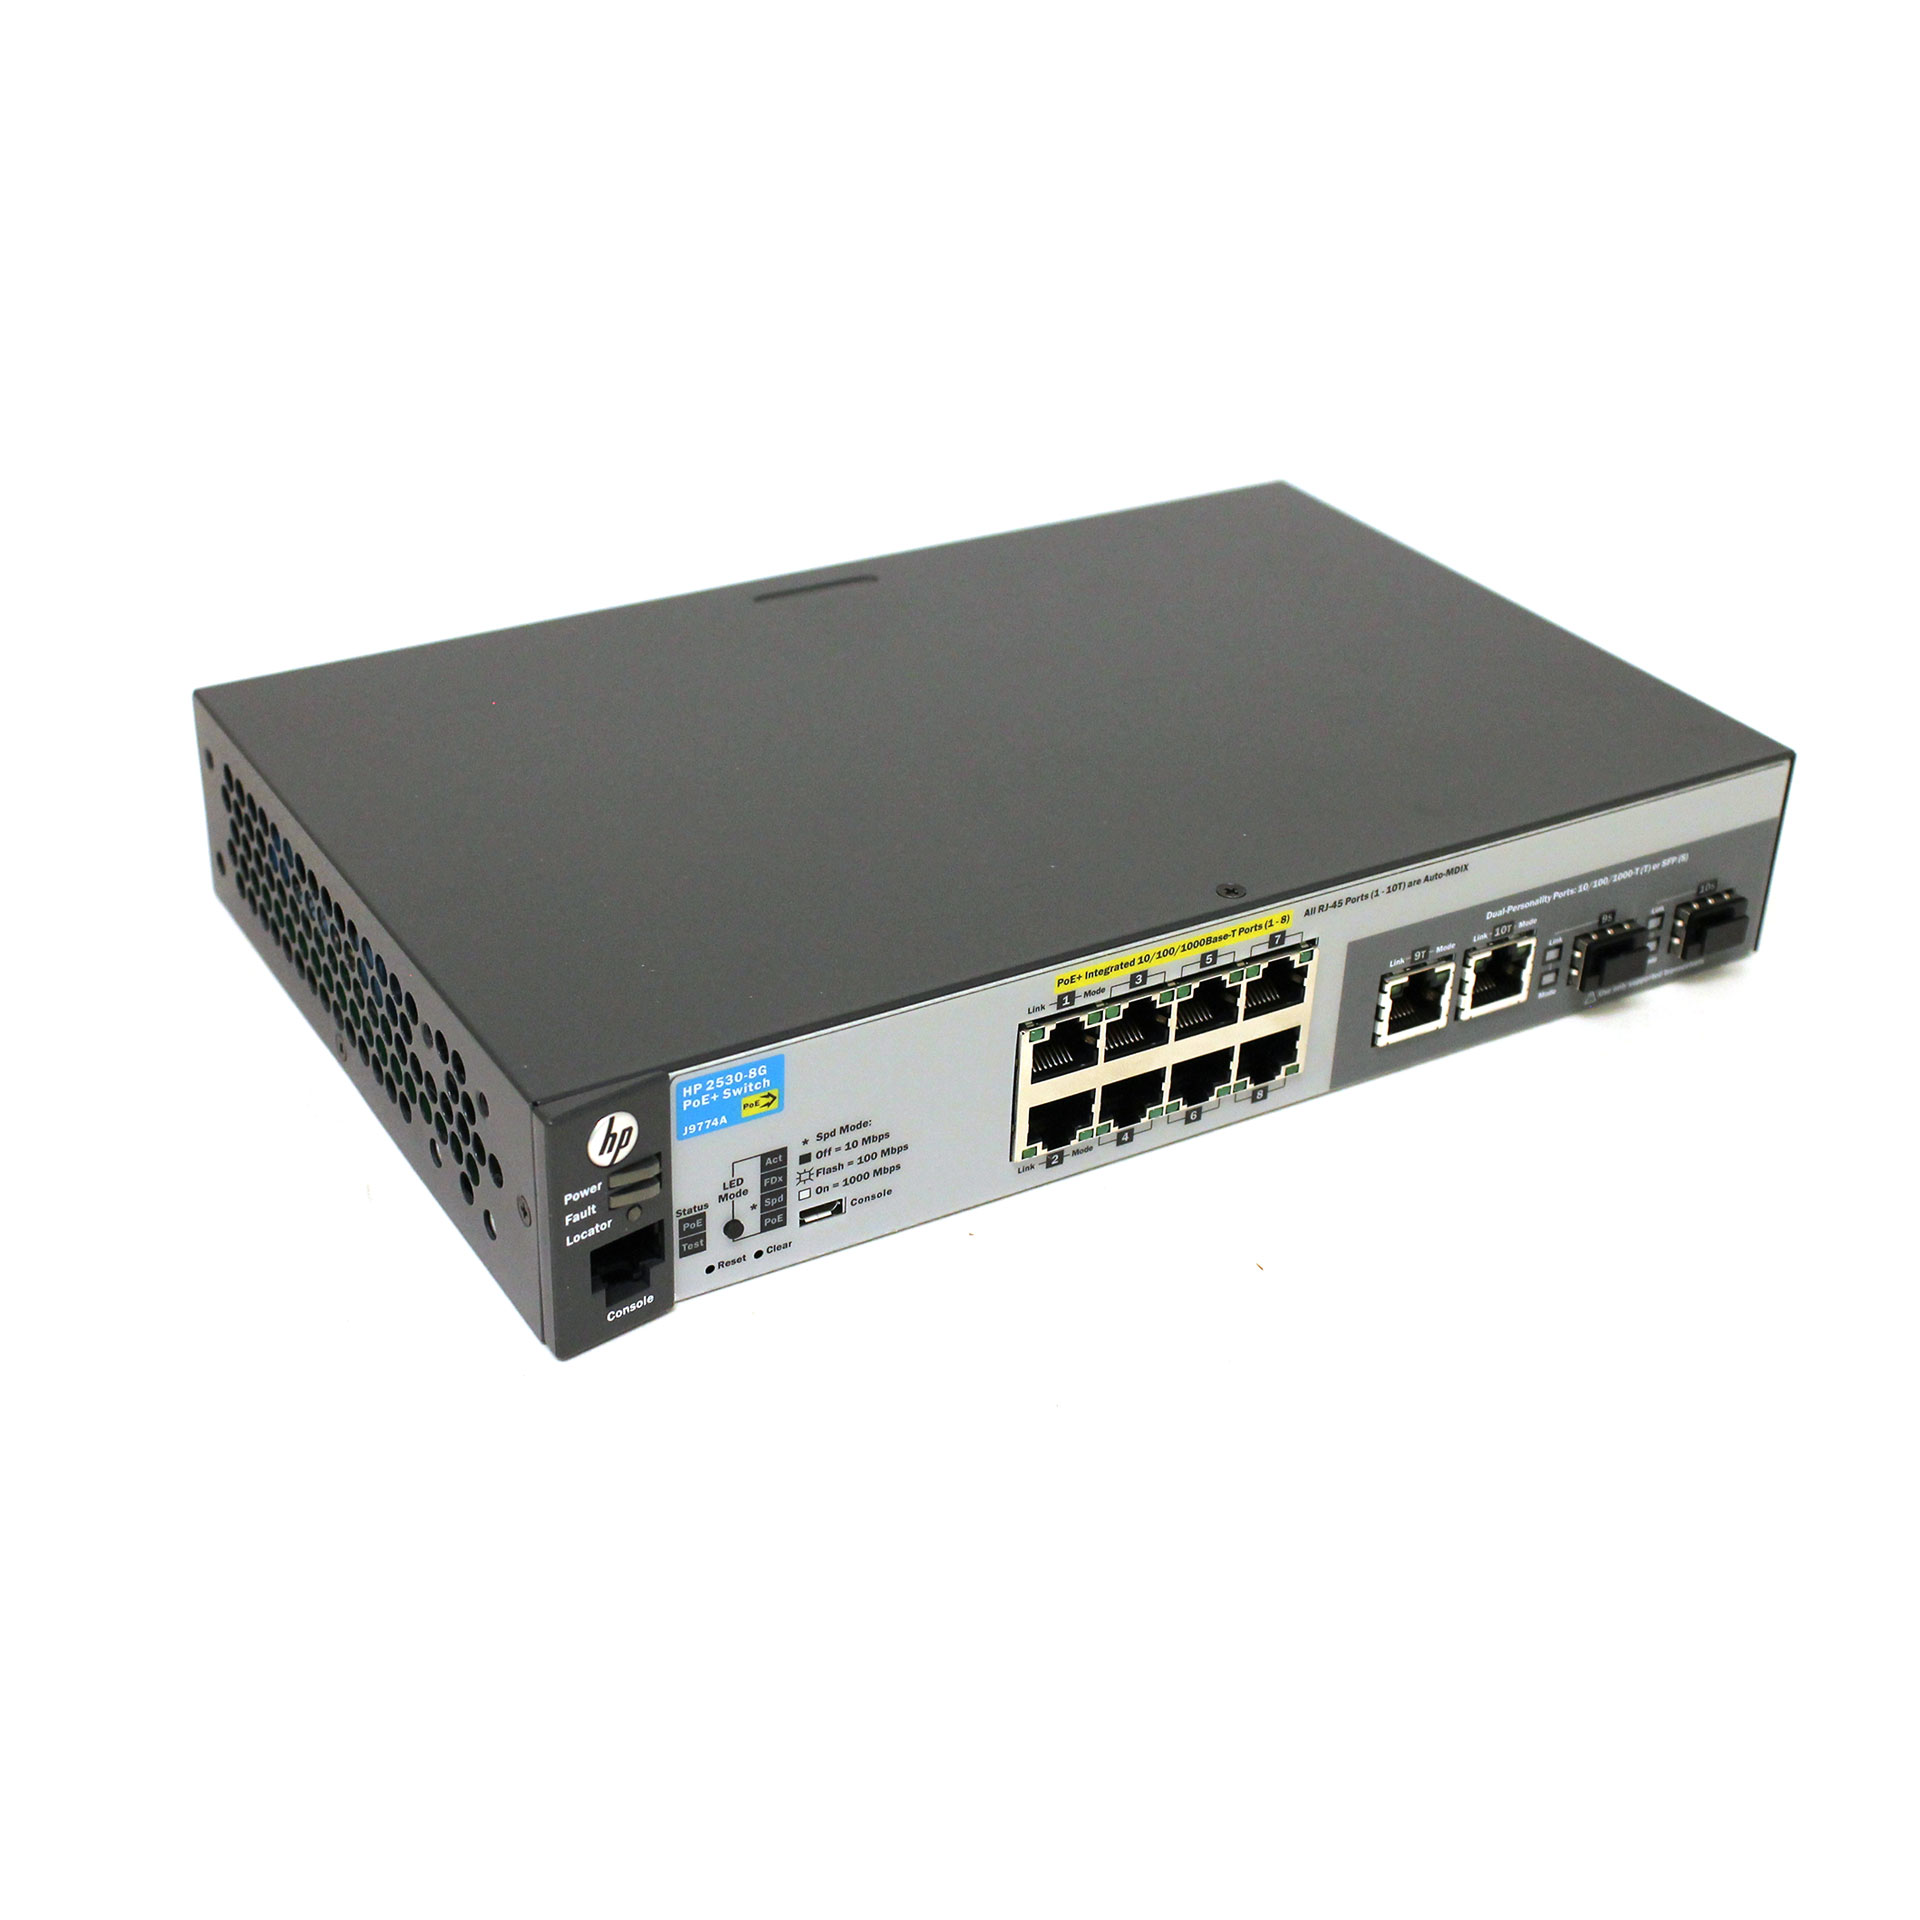 HP Gigabit Ethernet Switch 2530-8G-PoE+ J9774A#ABA Lifetime WNTY